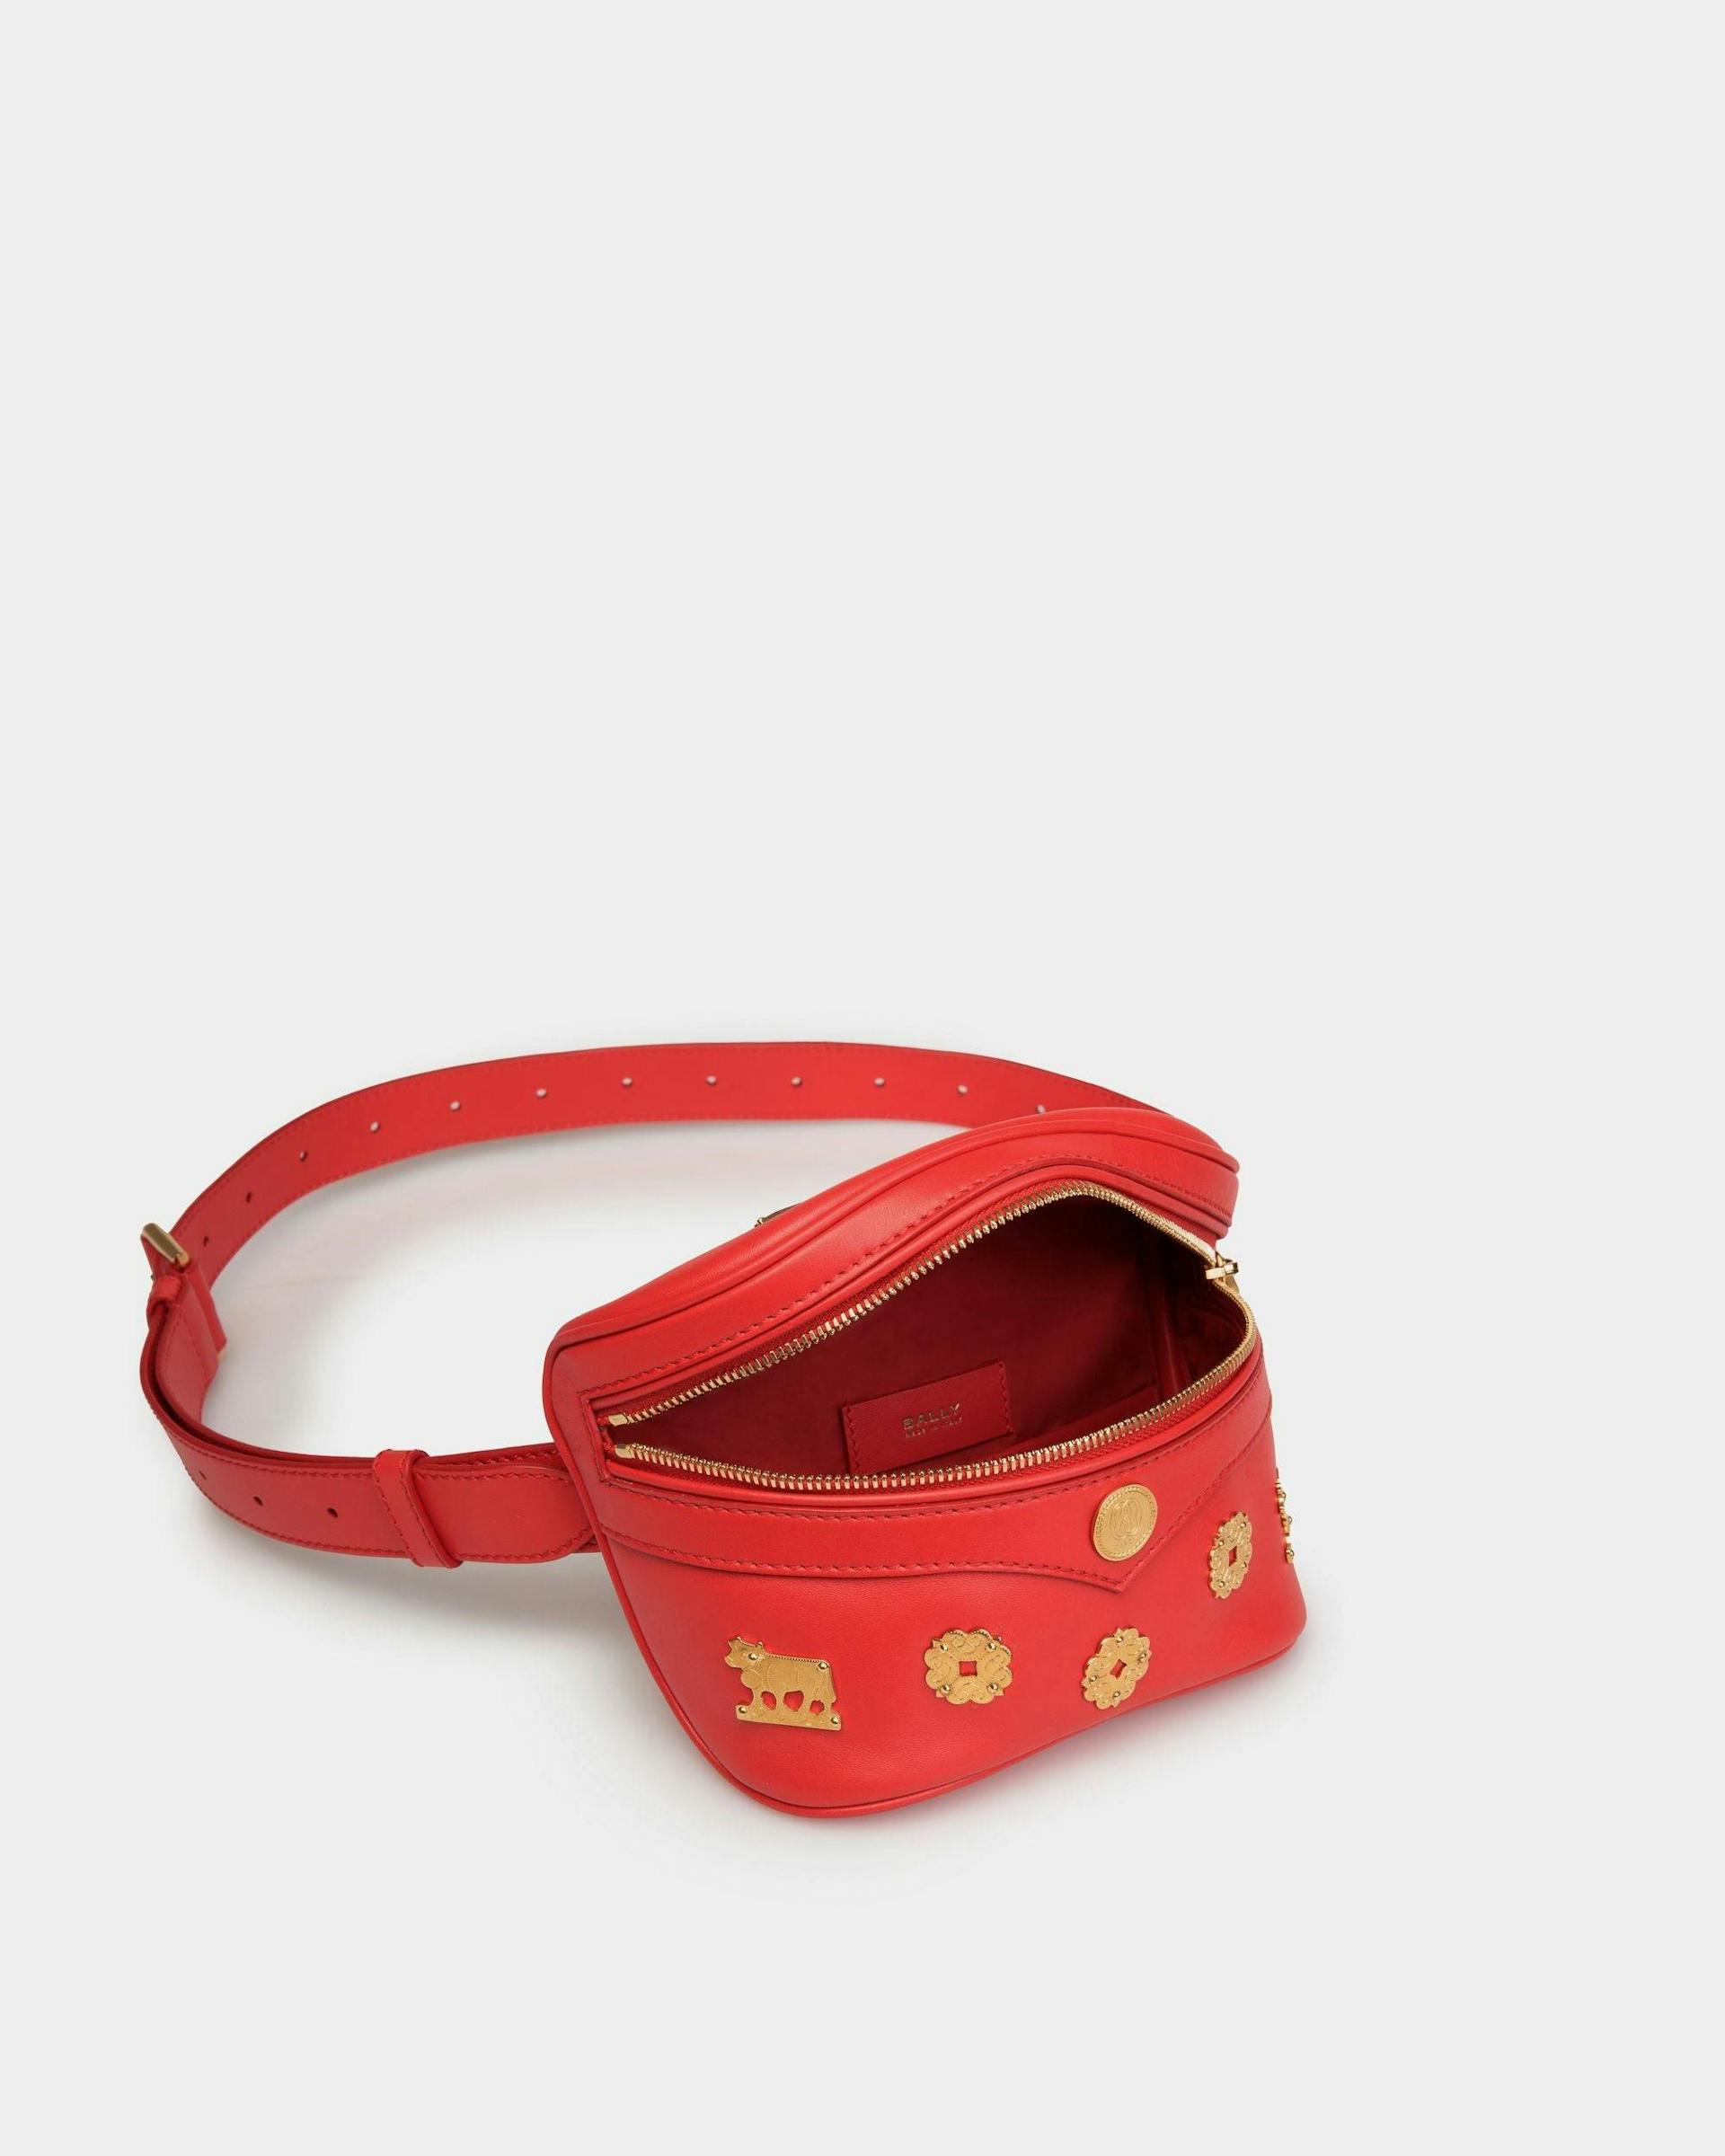 Women's Moutain Belt Bag  in Red Leather | Bally | Still Life Open / Inside